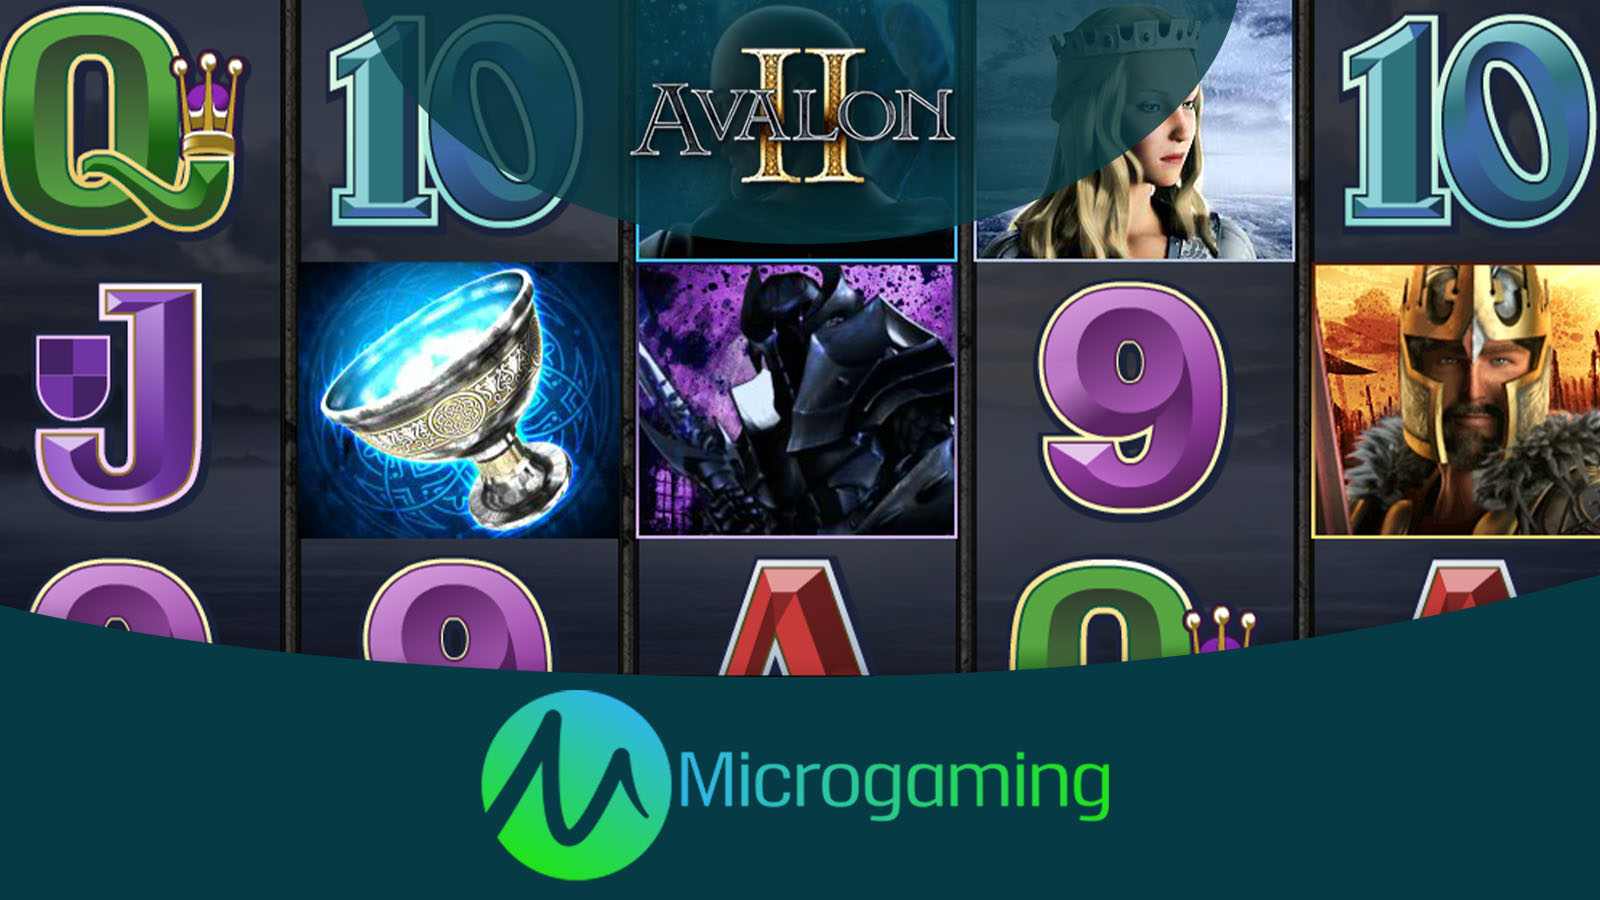 Avalon II – Microgaming